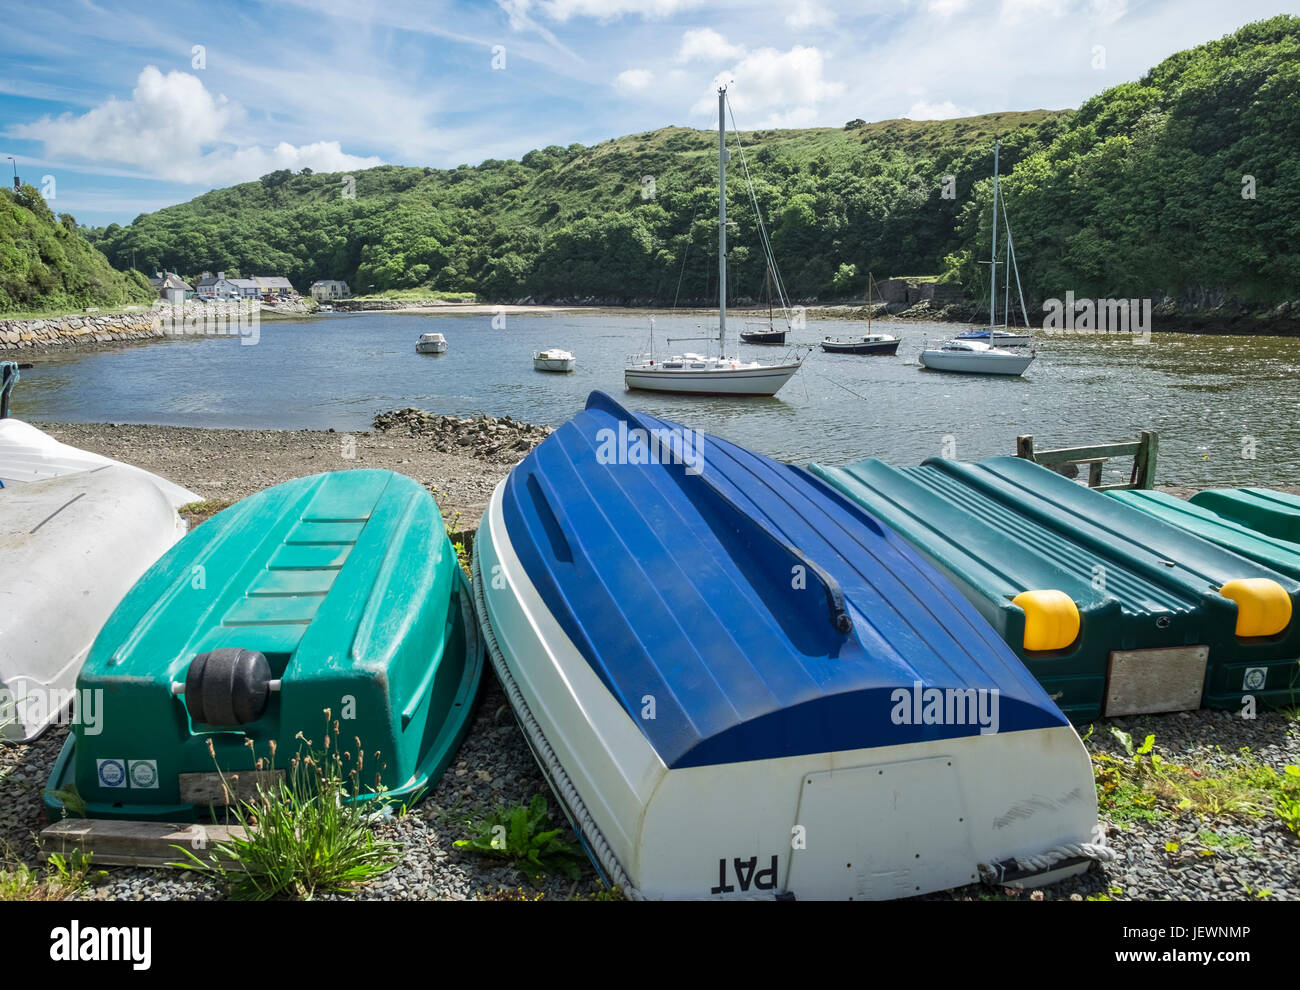 Dinghy boats in popular Solva (Solfach) village harbour, St Brides Bay, Pembrokeshire Coast National Park, Wales, UK Stock Photo